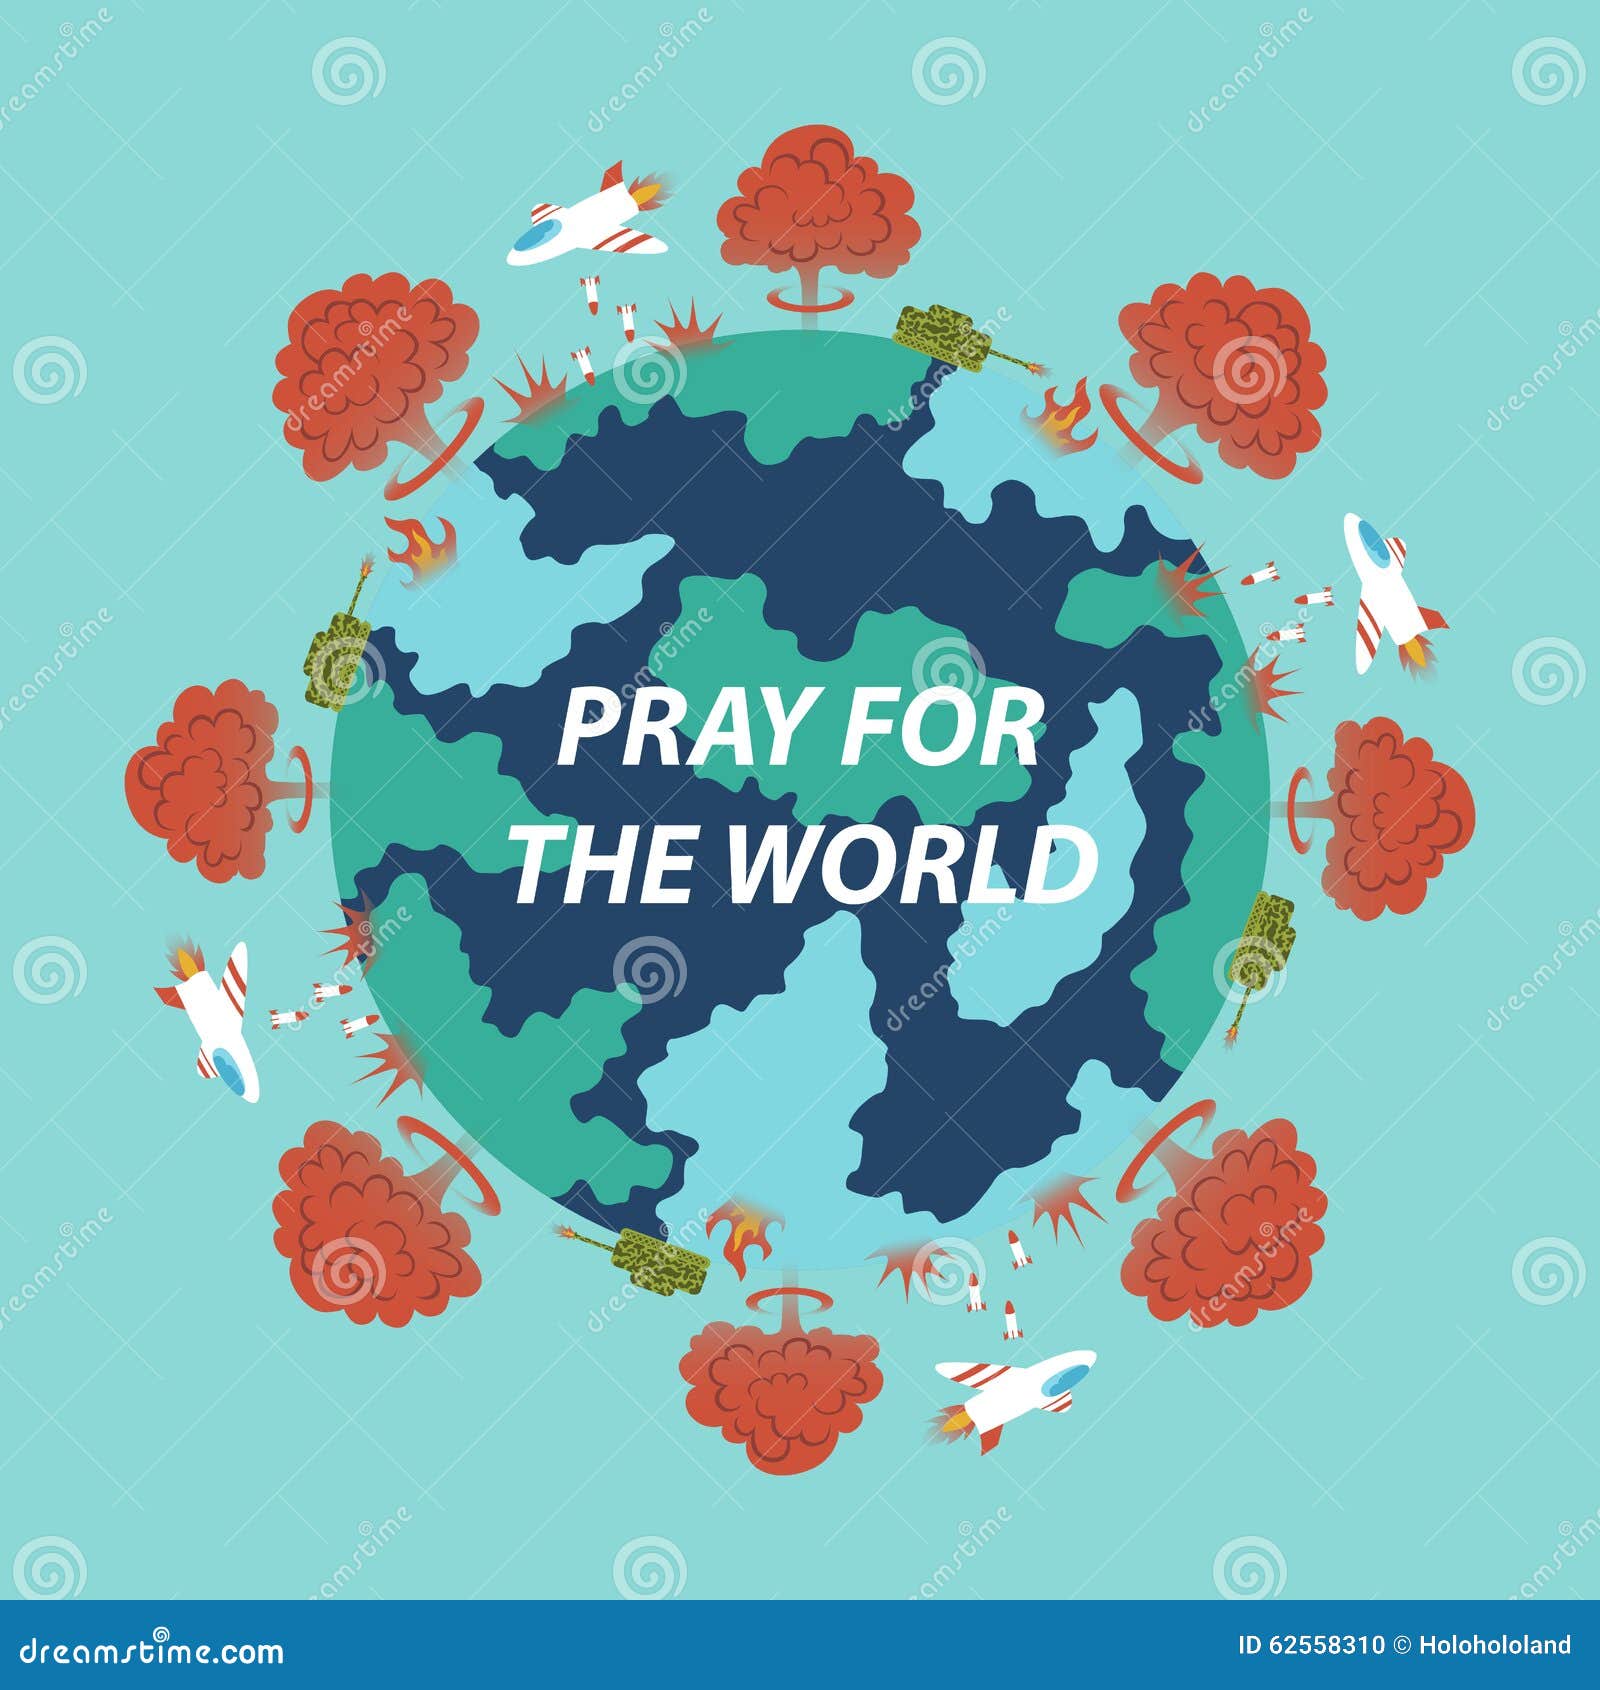 Pray for the world stock vector. Illustration of dead - 62558310